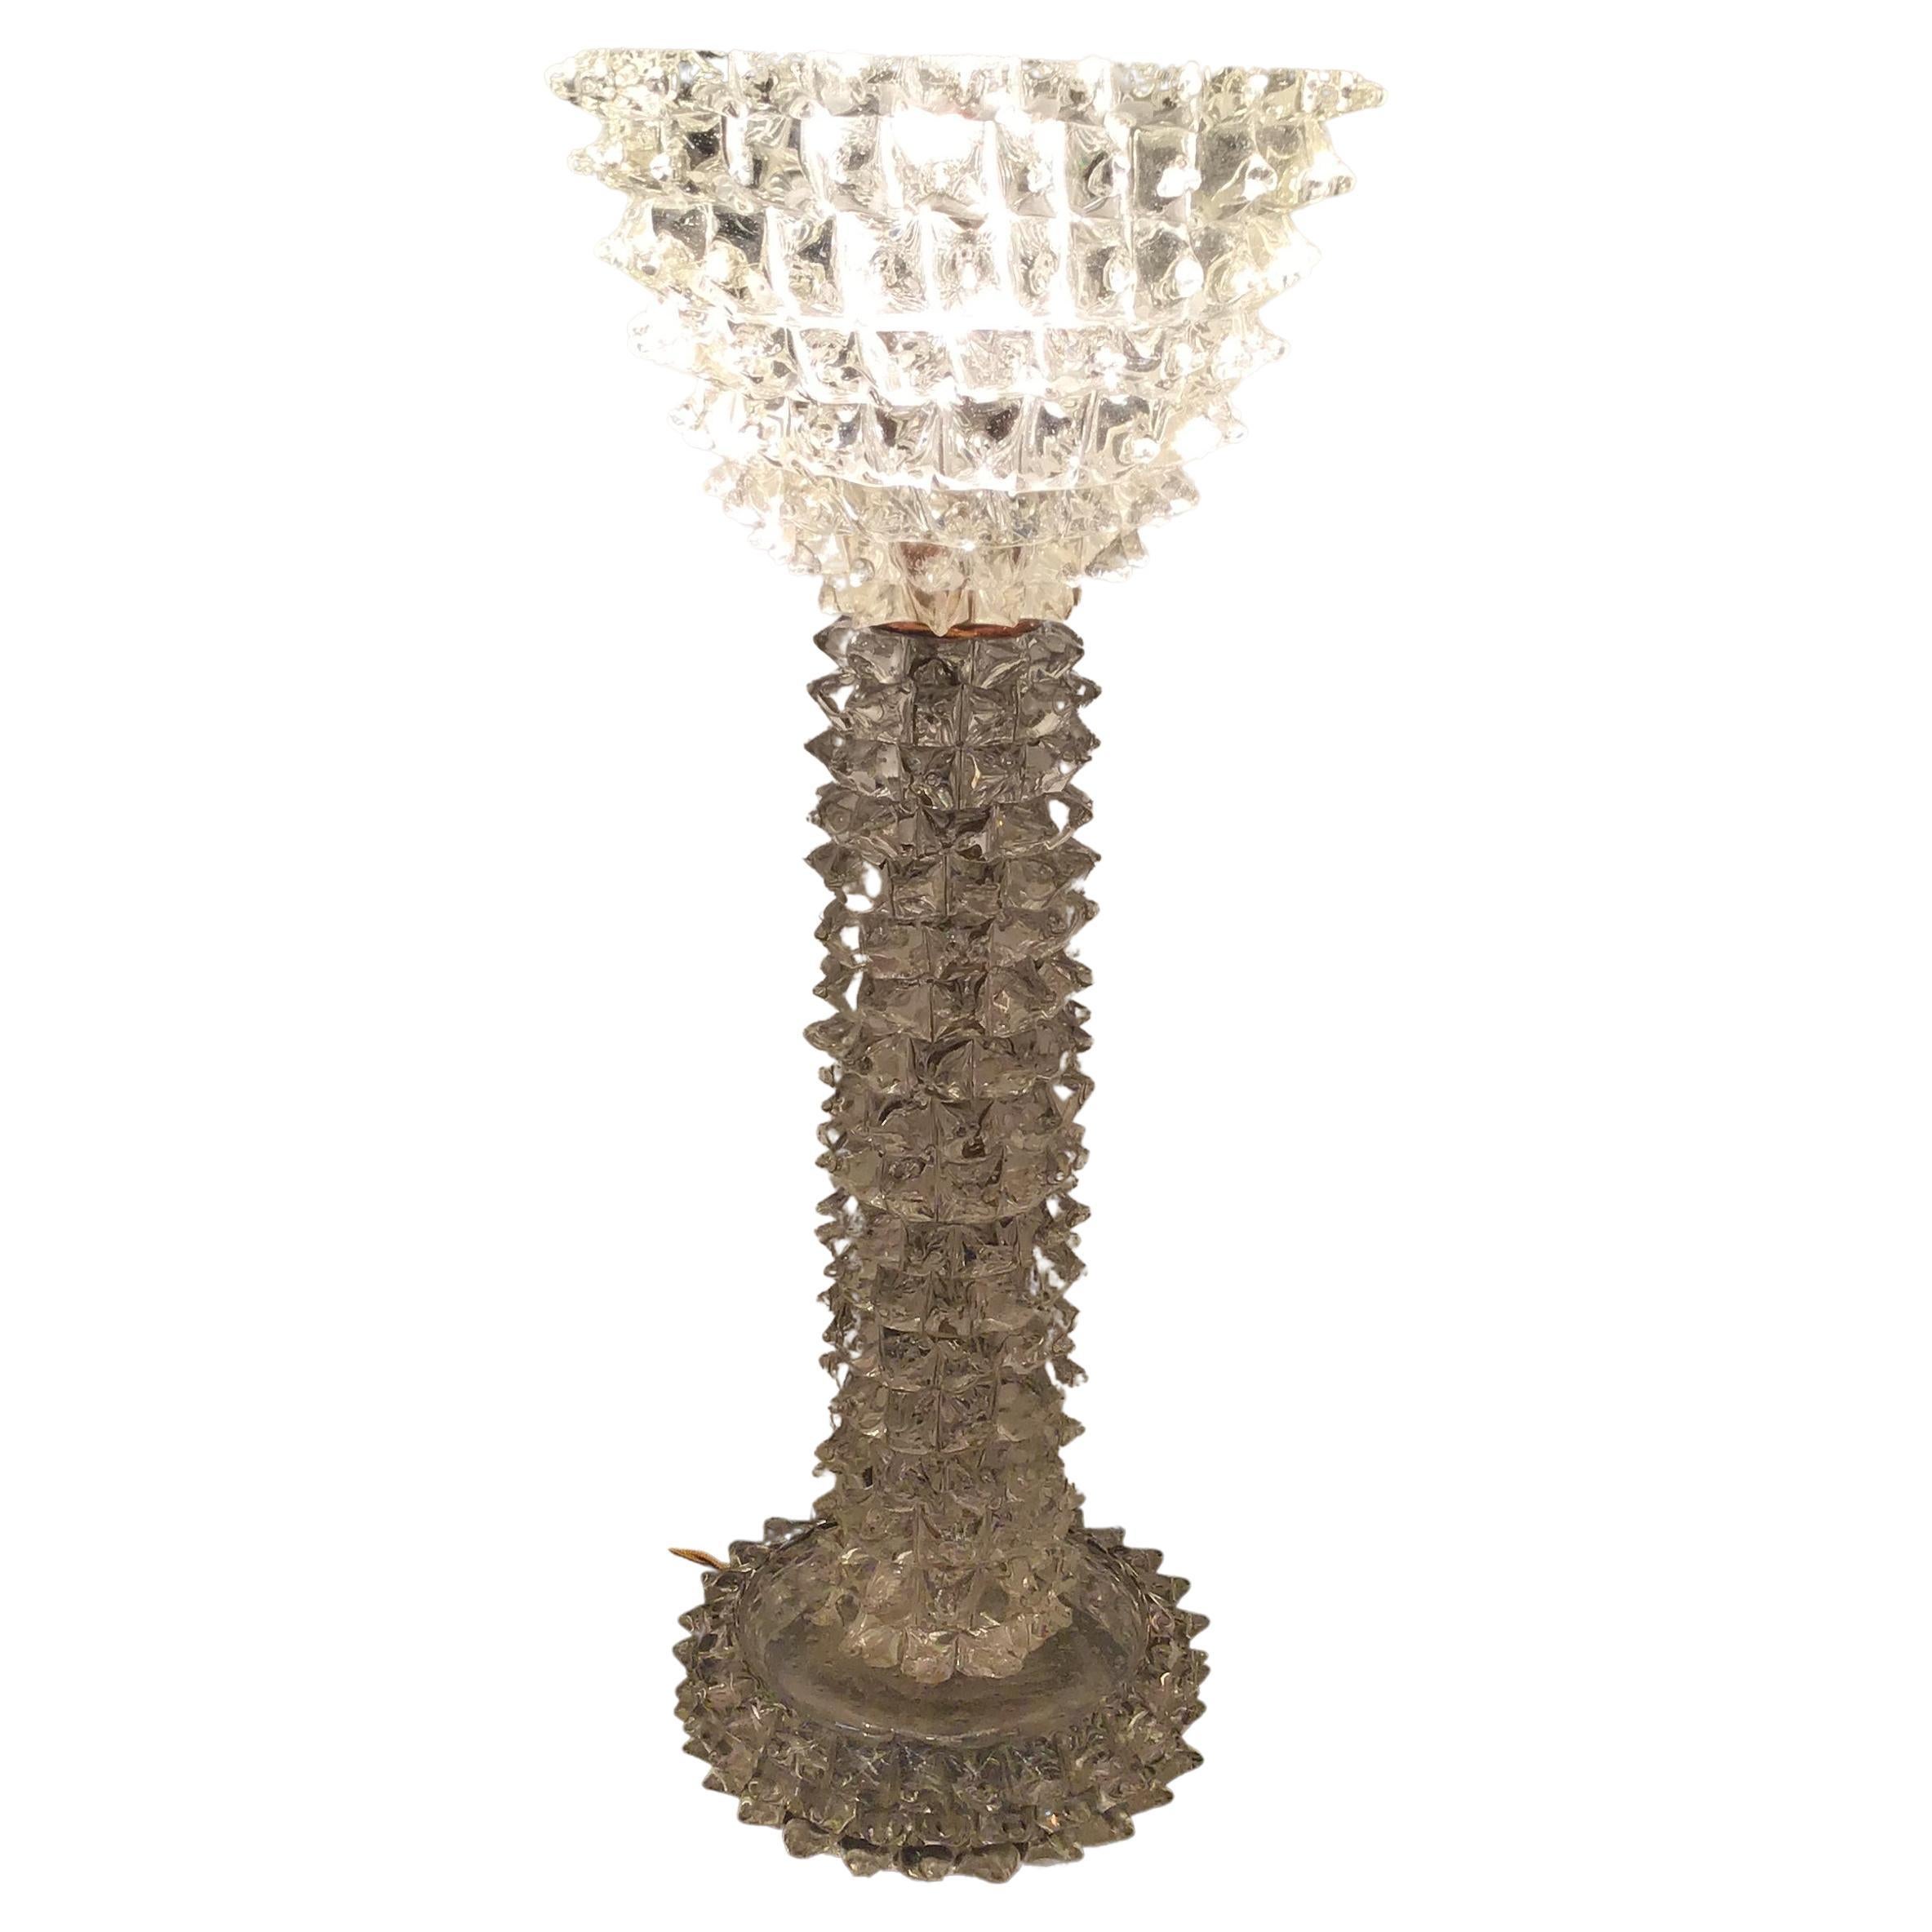 Barovier e Toso Table Lamp Brass Murano Glass, 1940 Italy